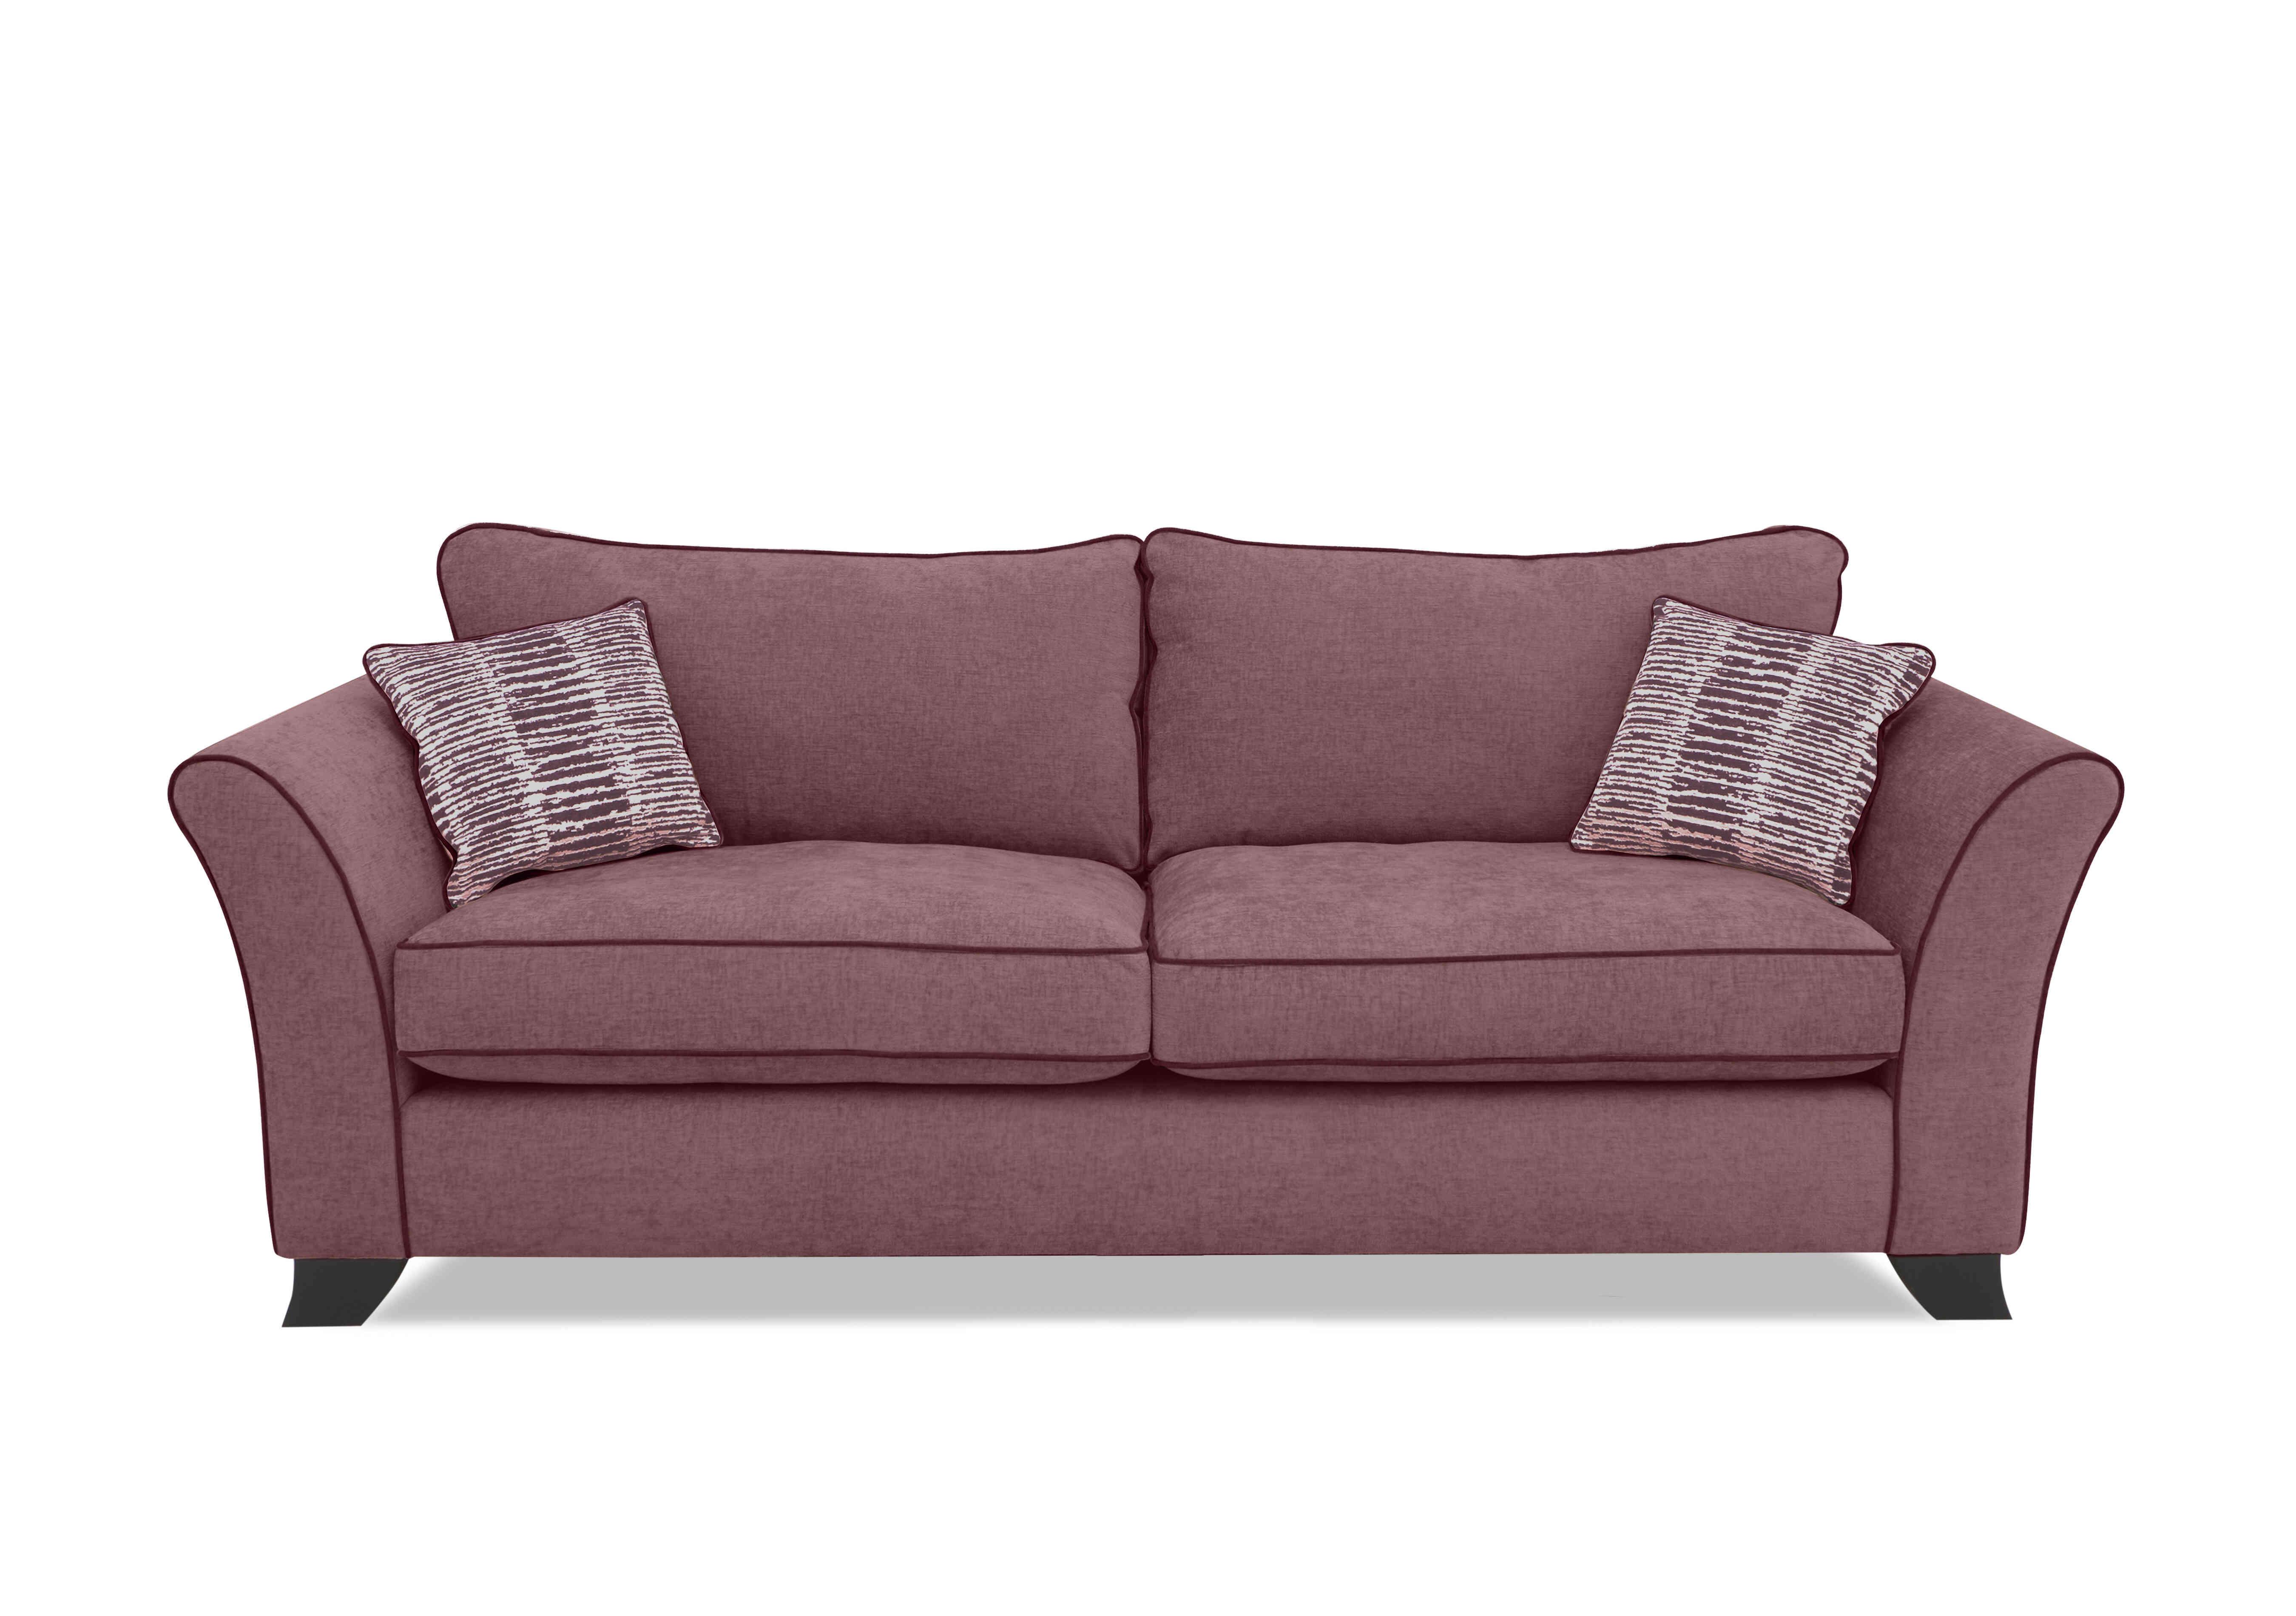 Stellar 4 Seater Classic Back Sofa in Bolero Mulberry Contrast on Furniture Village